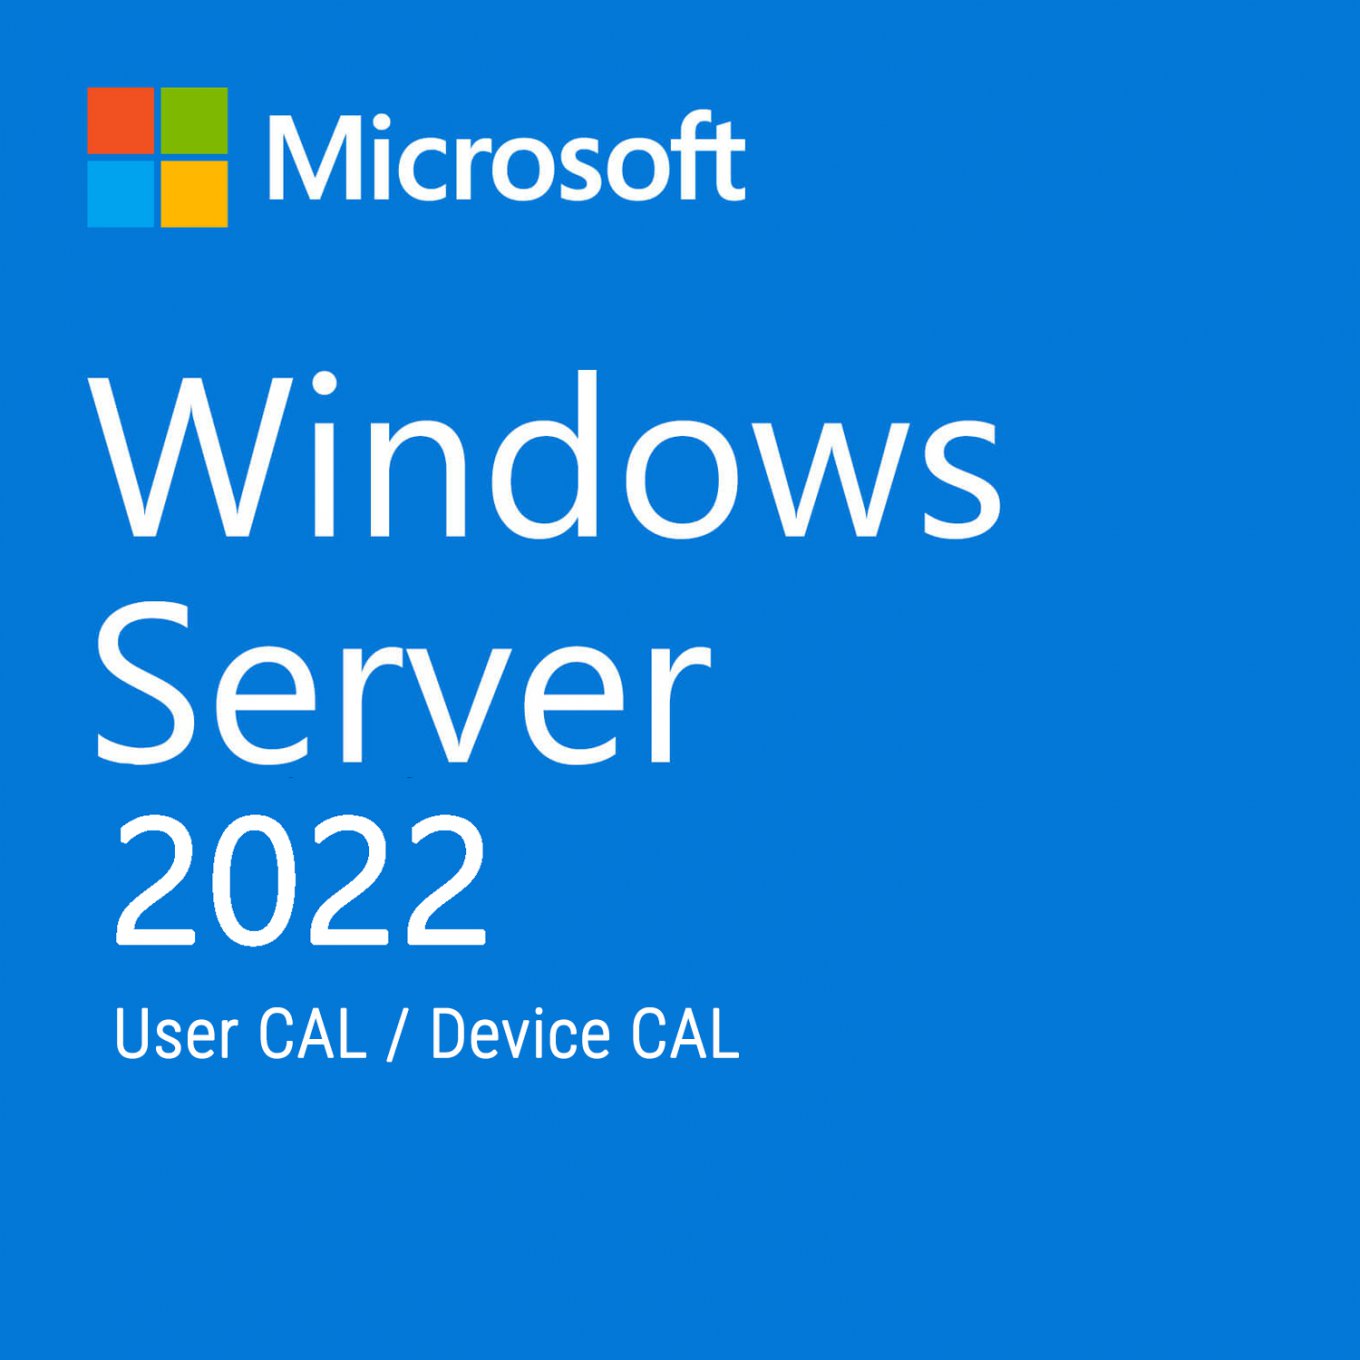 Windows Server 2022 - User / Device CALs